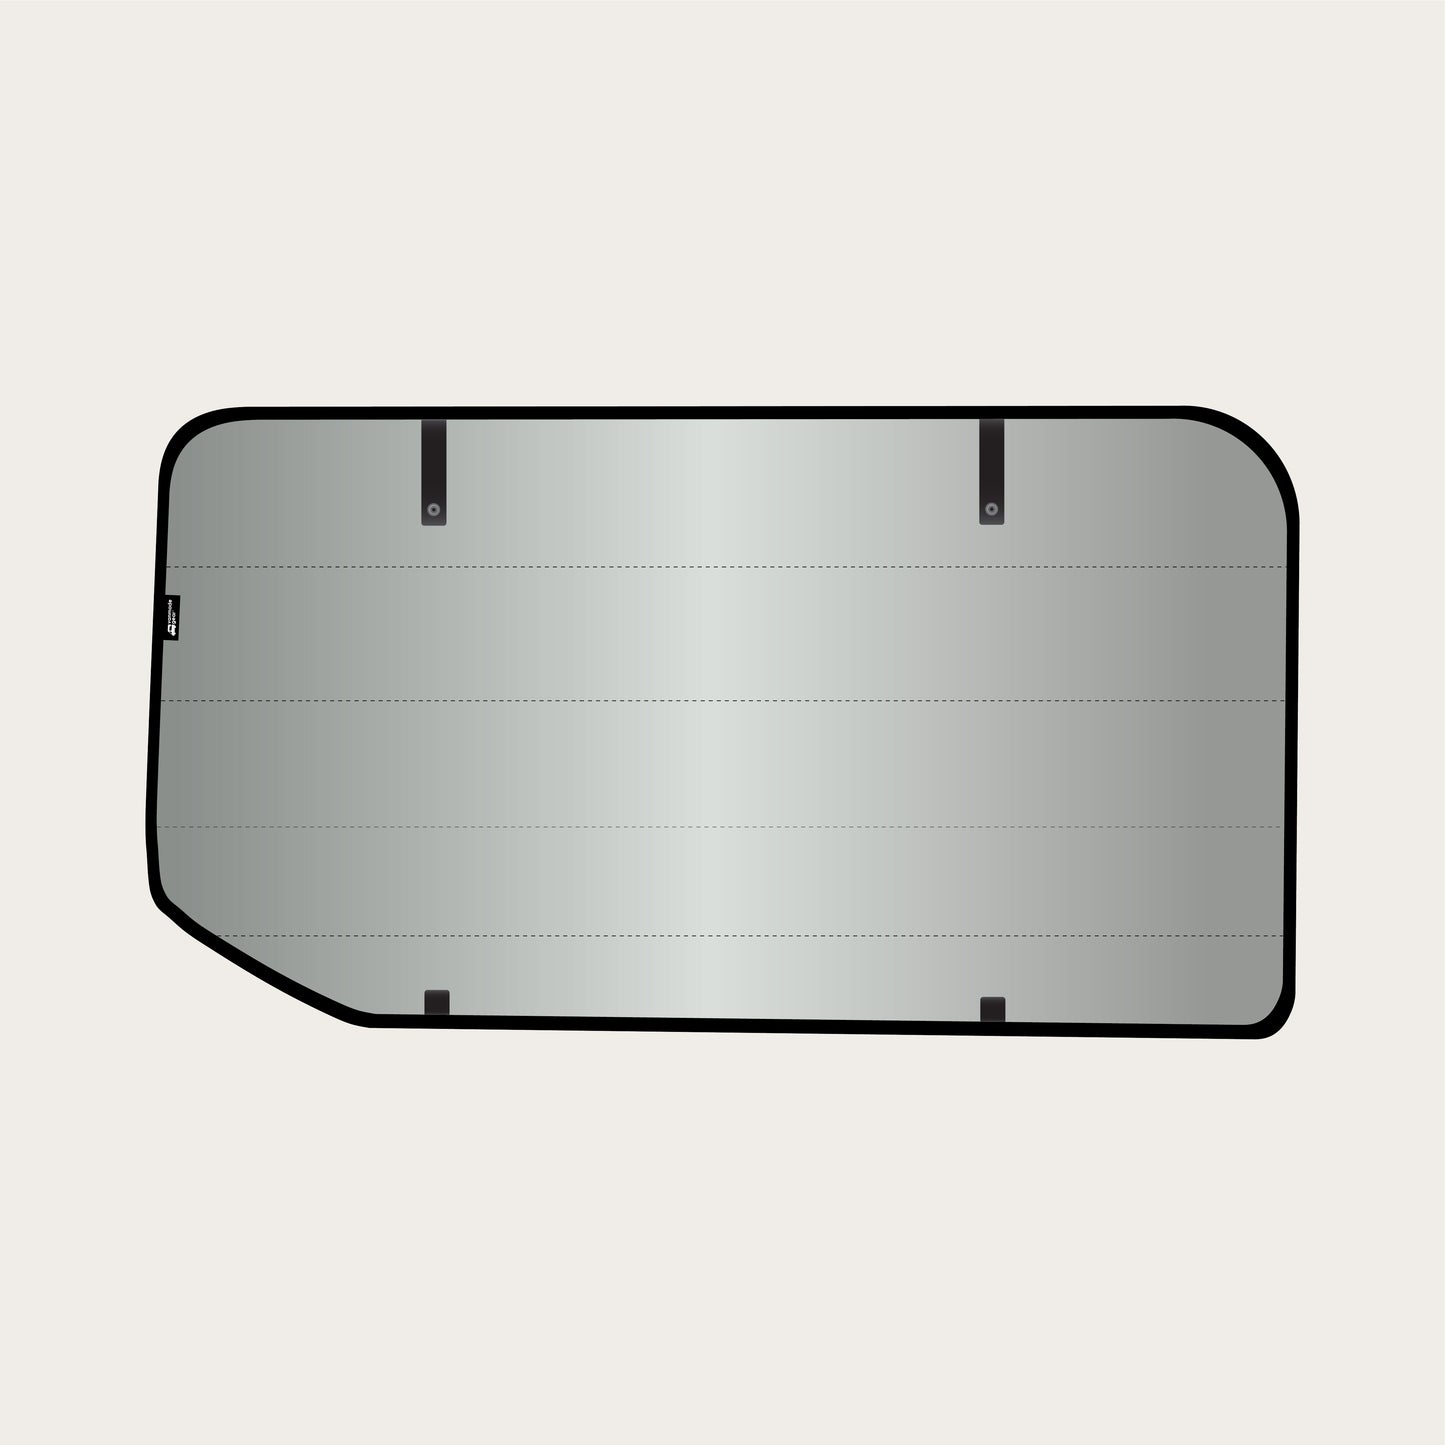 Transit - 148 Extended Quarter Panel Shade (Driver's Side)